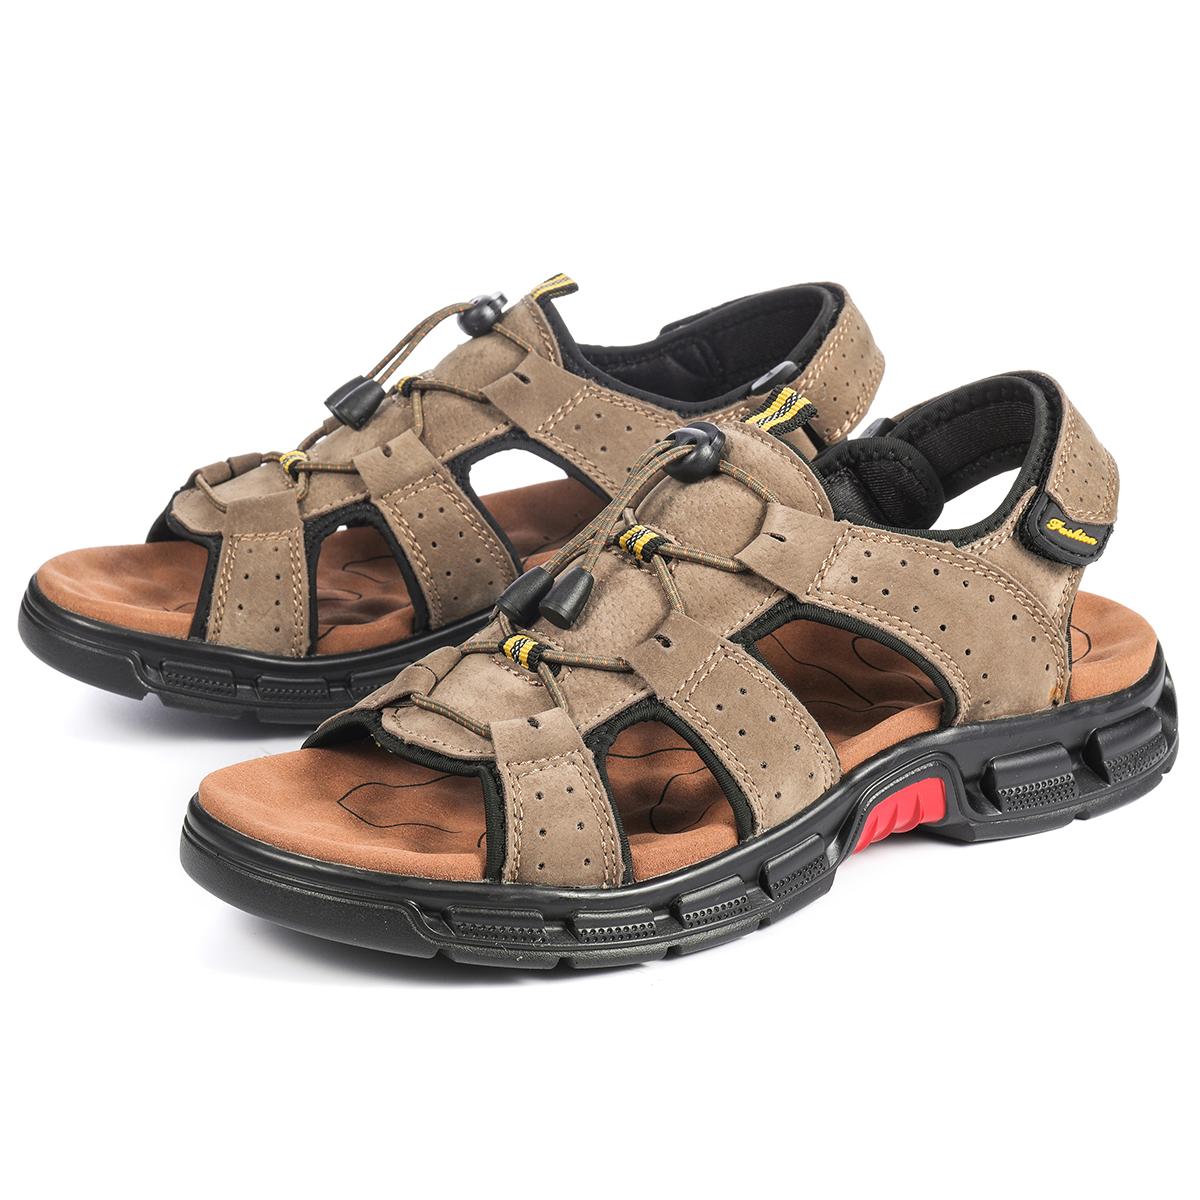 gracosy Men's Sports Sandals, Hiking Outdoor Summer Fisherman Flat Sandals